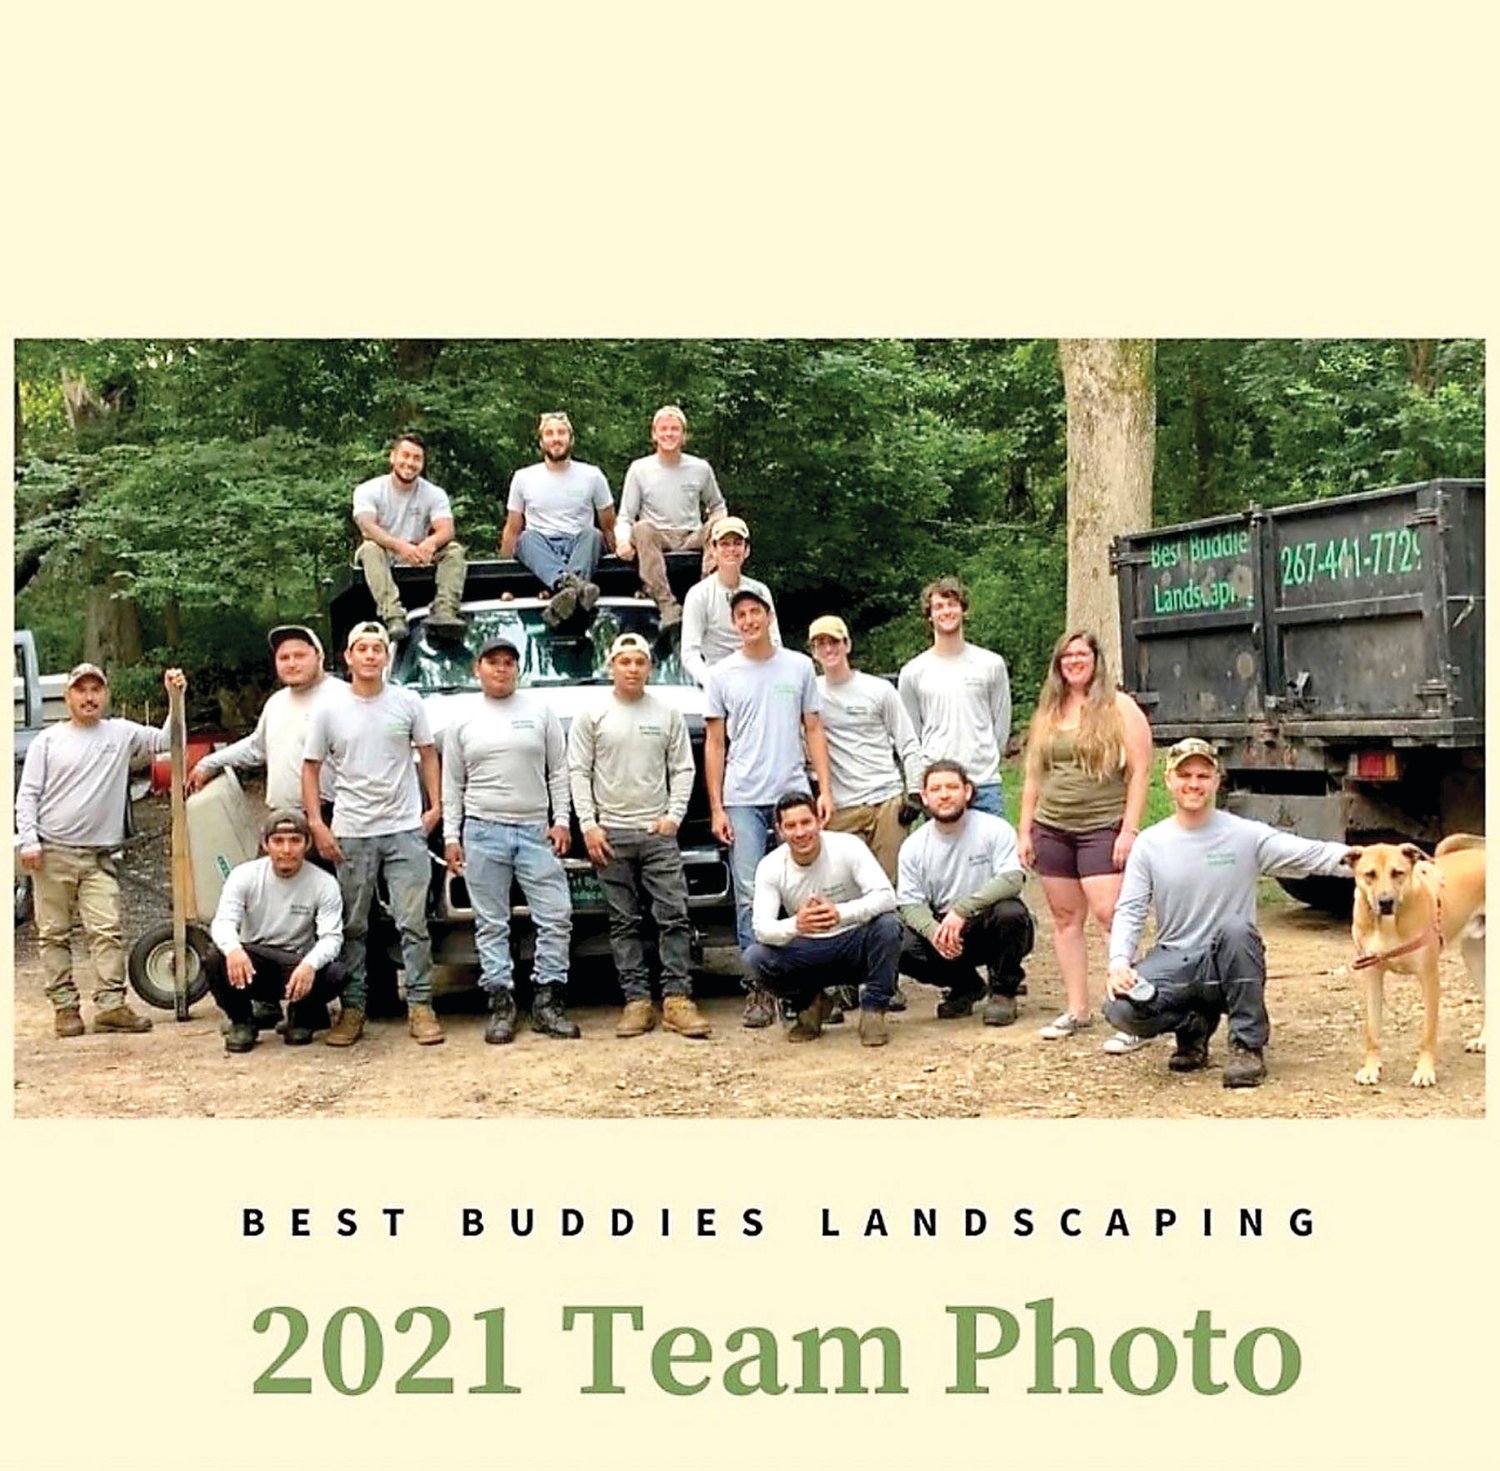 The Best Buddies Landscaping team.